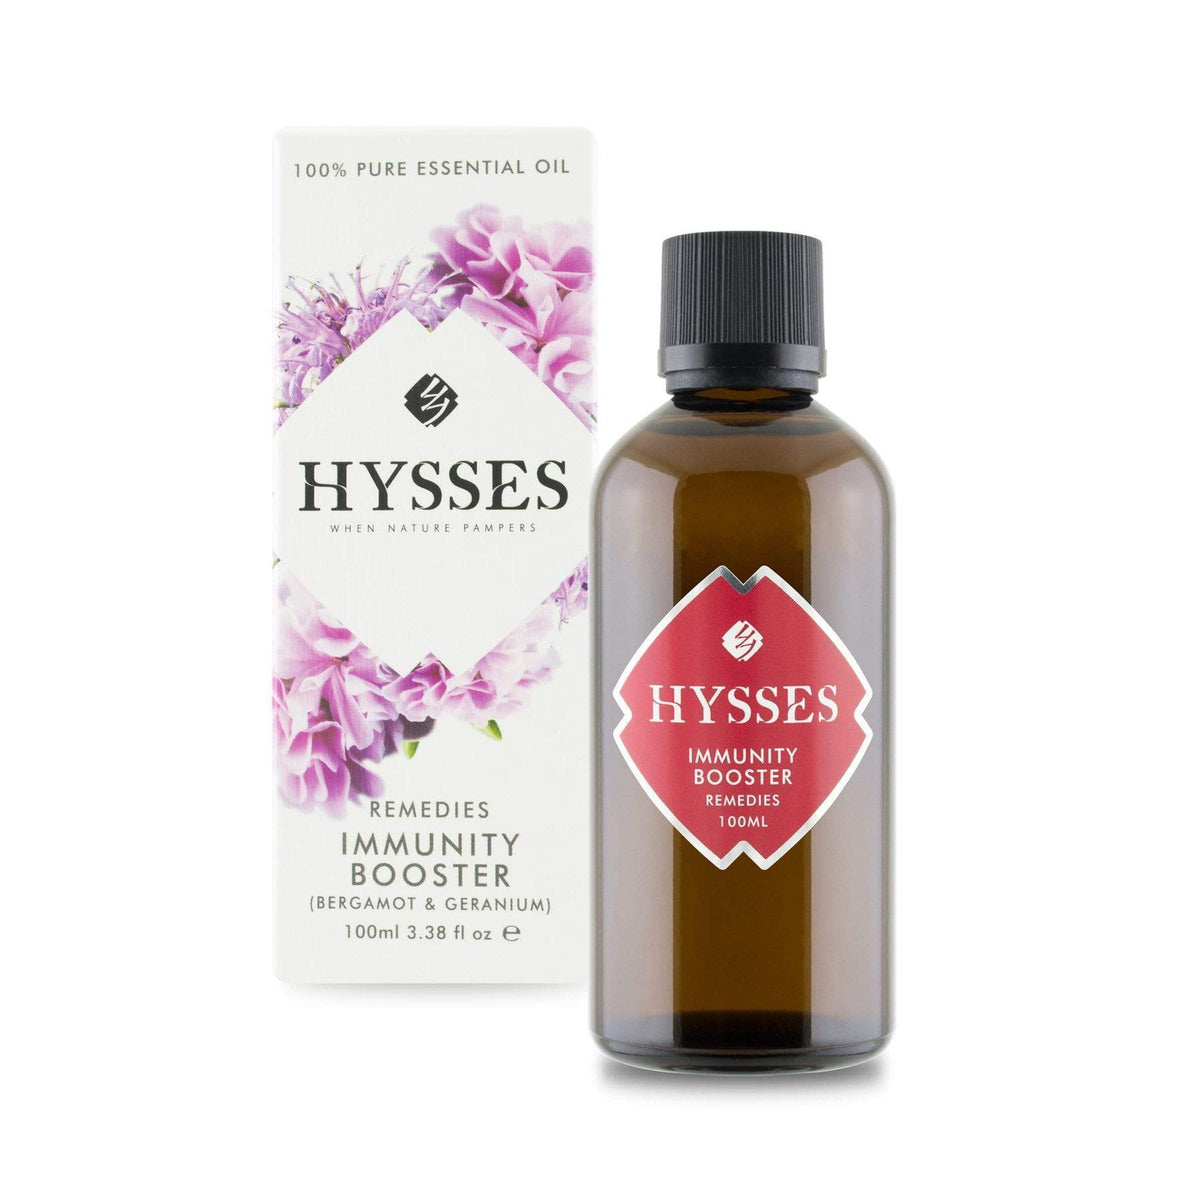 Hysses Essential Oil 100ml Remedies, Immunity Booster